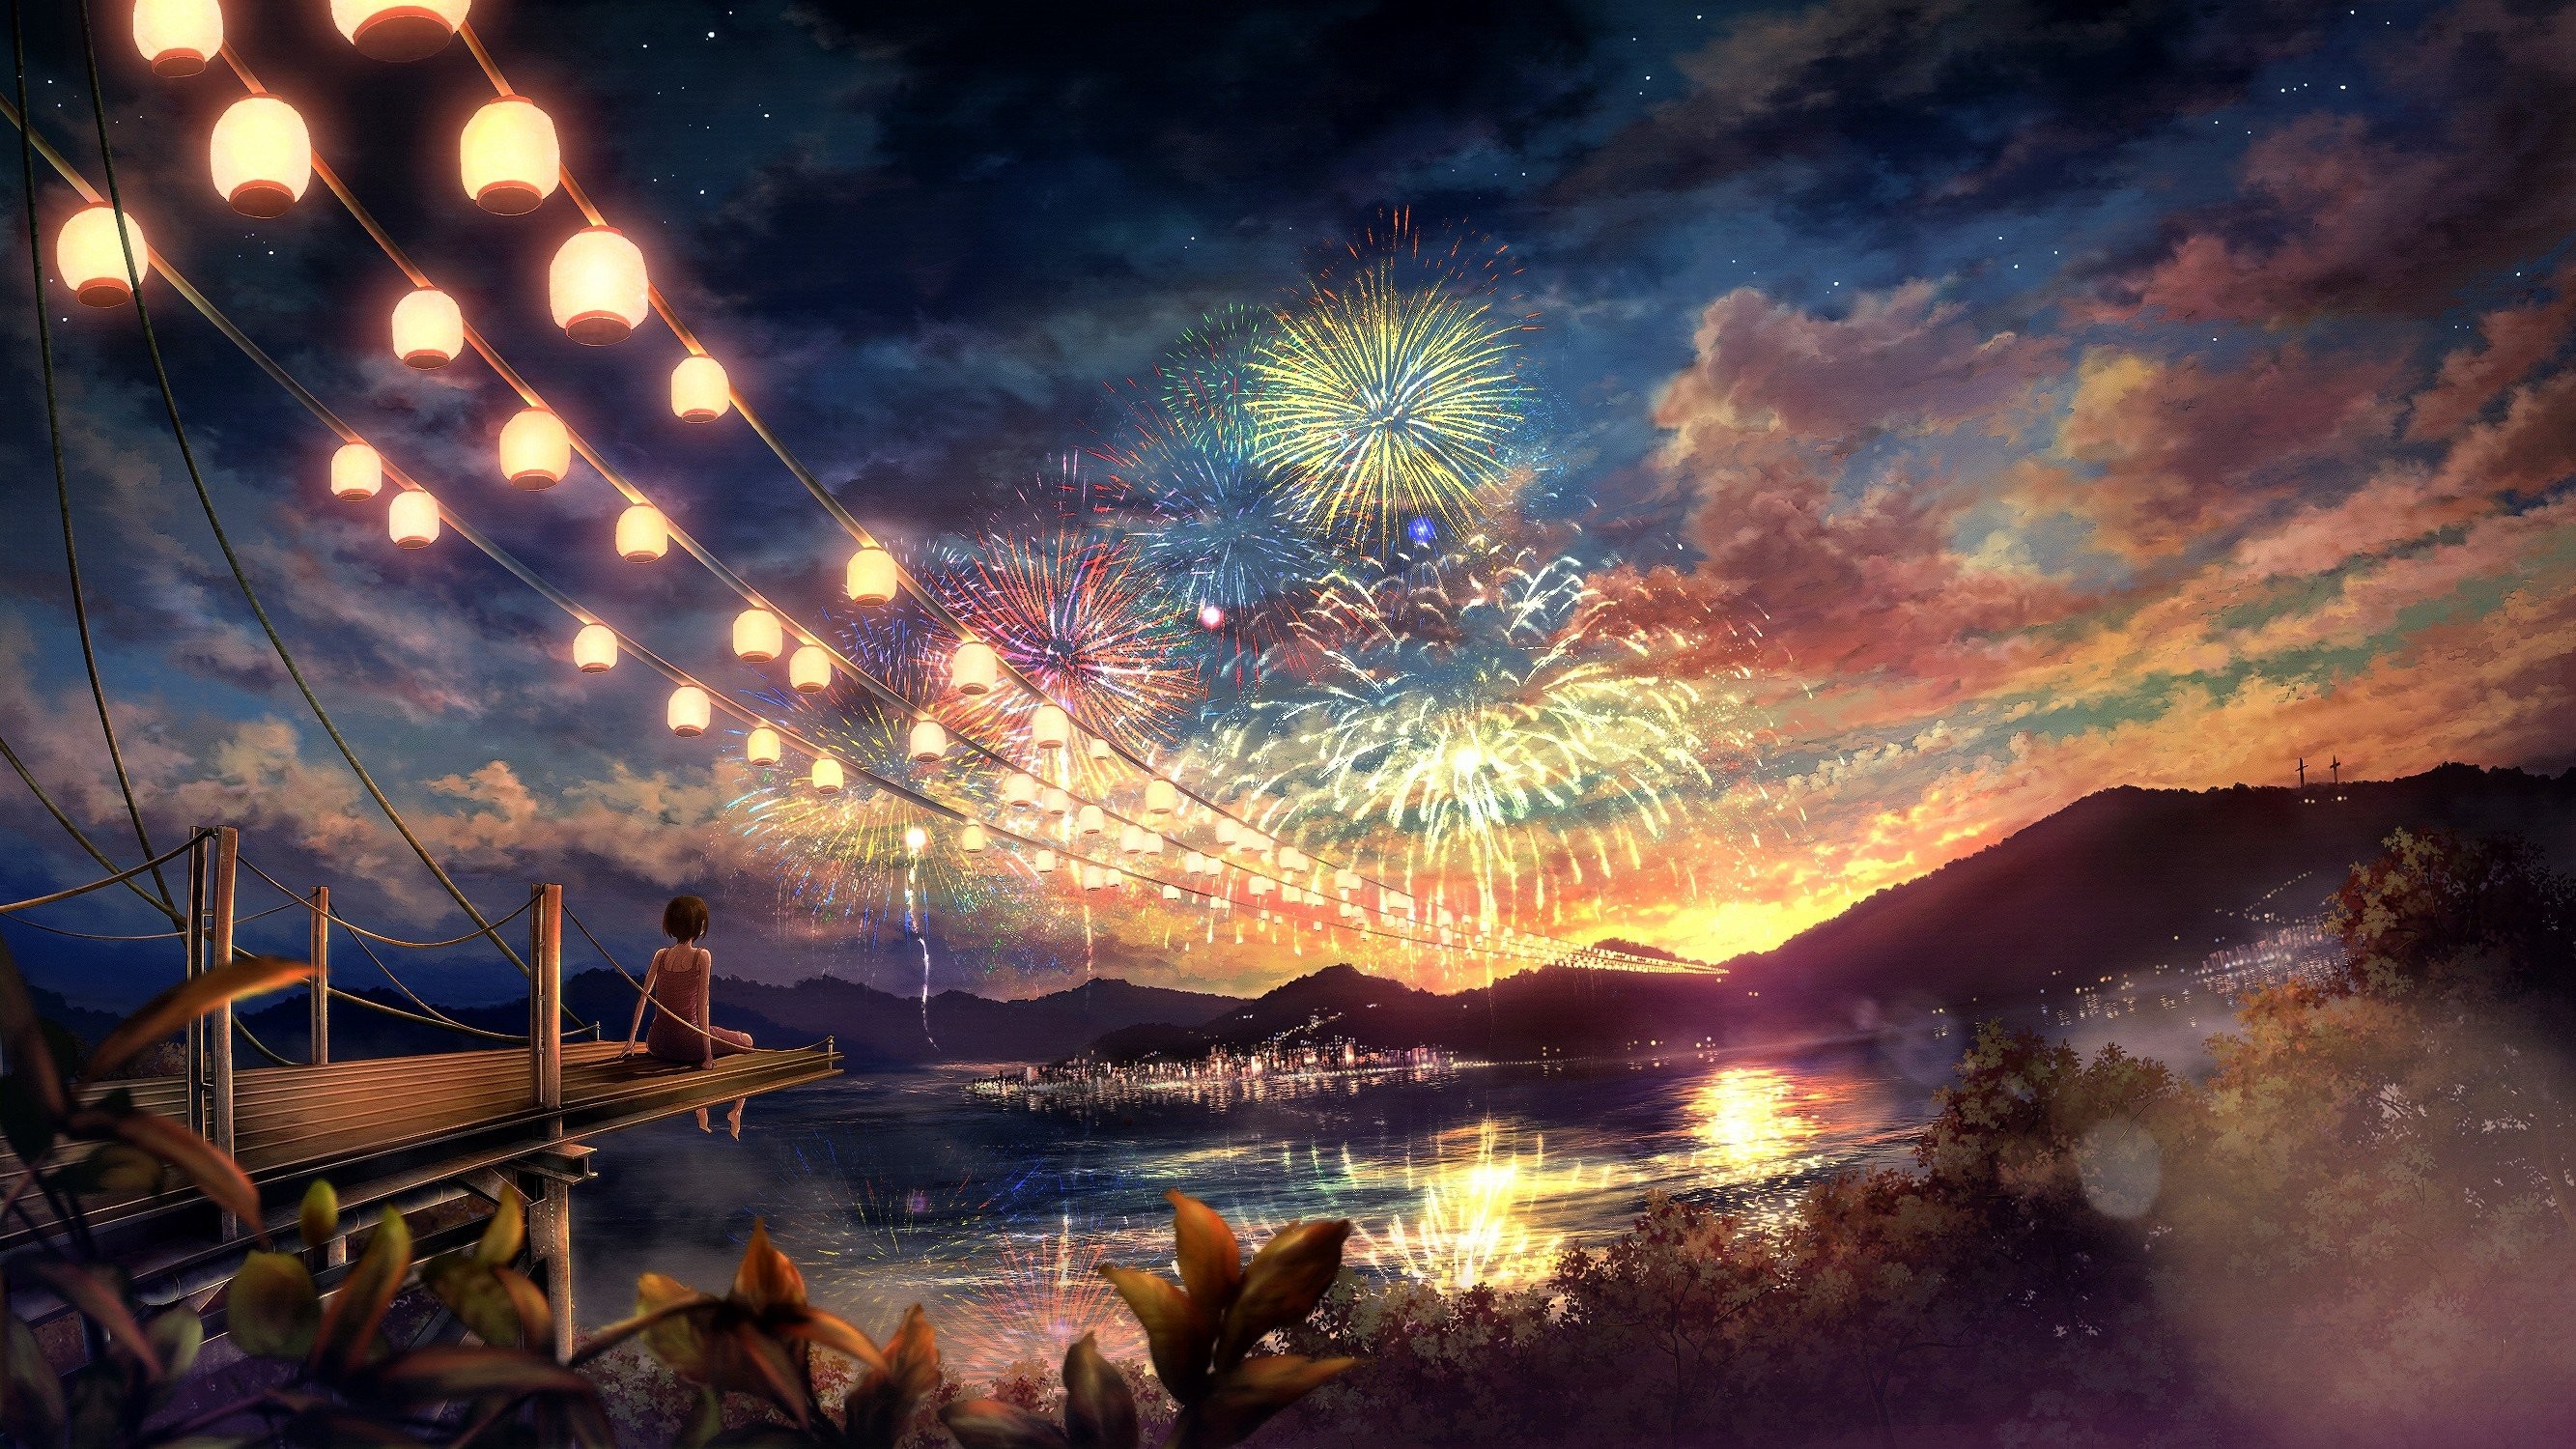 Night Anime Scenery High Quality Resolution Wallpapers - High Resolution  Anime Landscape - 2667x1500 Wallpaper 